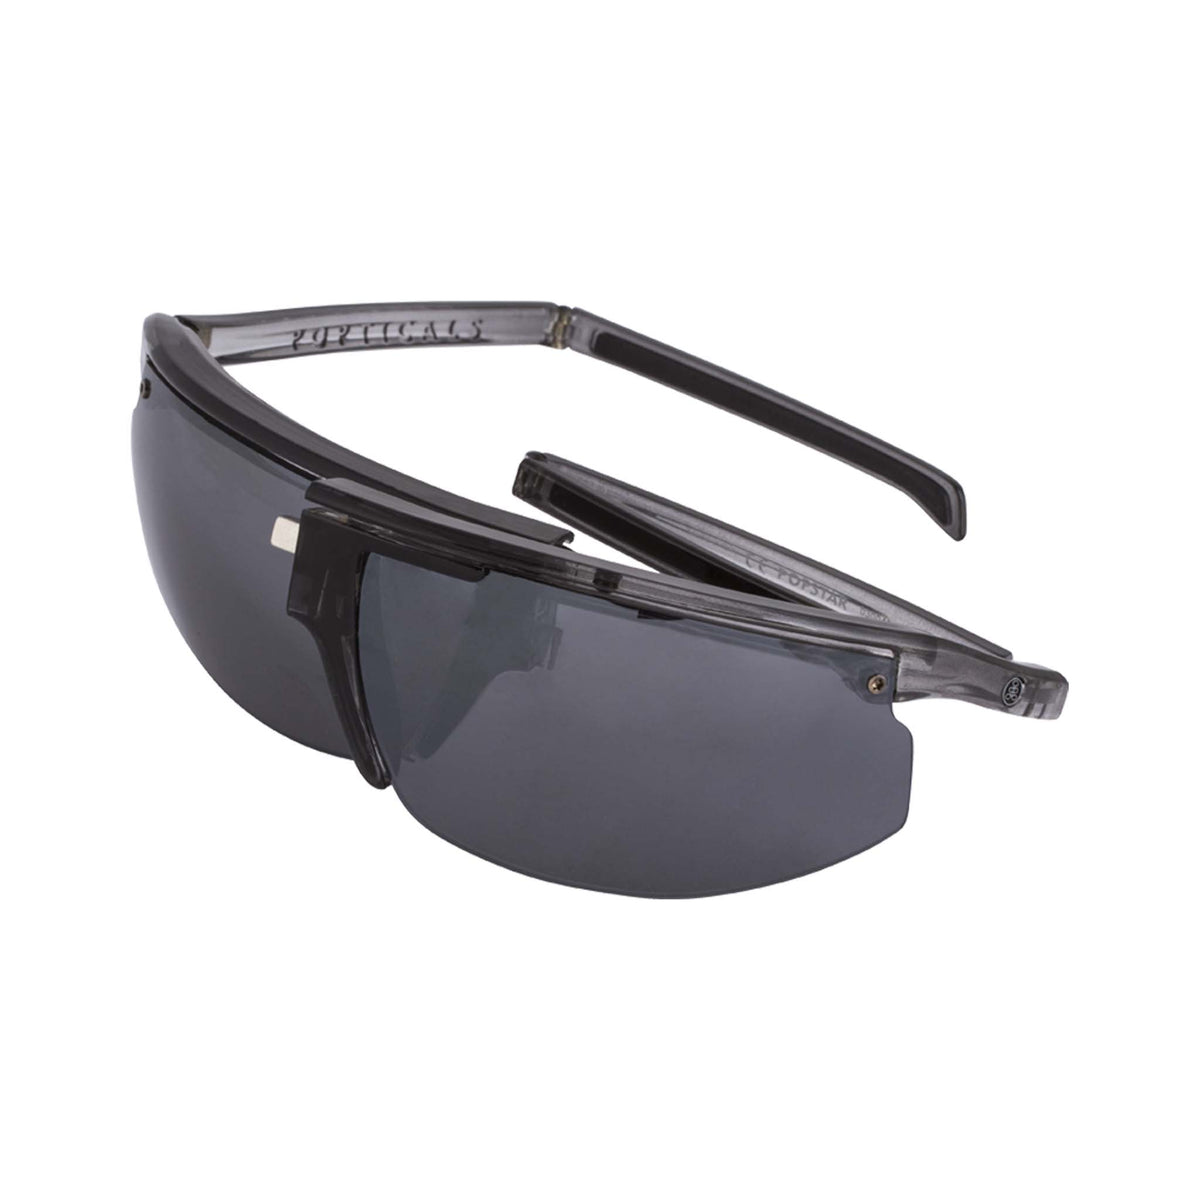 Popticals, Premium Compact Sunglasses, PopStar, 030040-SFLN, Polarized Sunglasses, Gloss Smoke/Clear Crystal Frame, Gray Lenses w/Silver Mirror Finish, Spider View